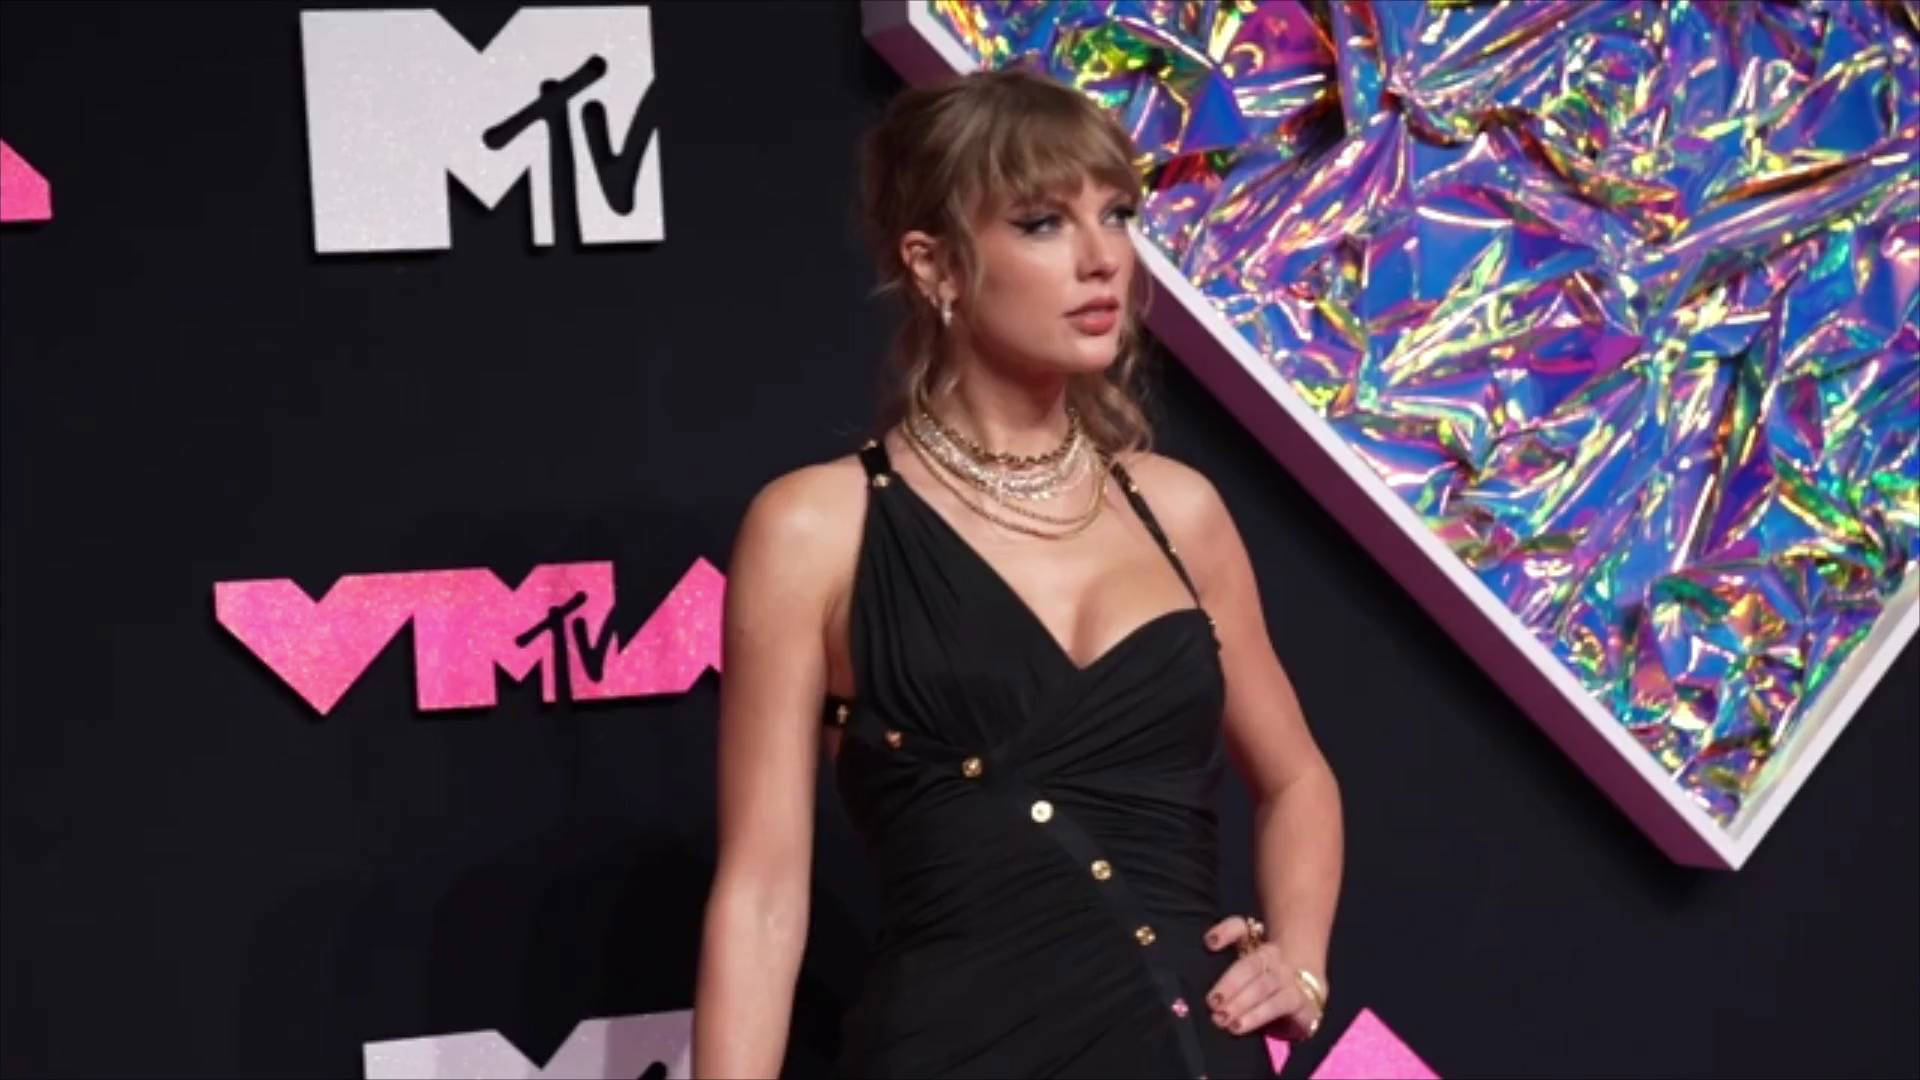 Taylor Swift takes home top prize at MTV VMAs